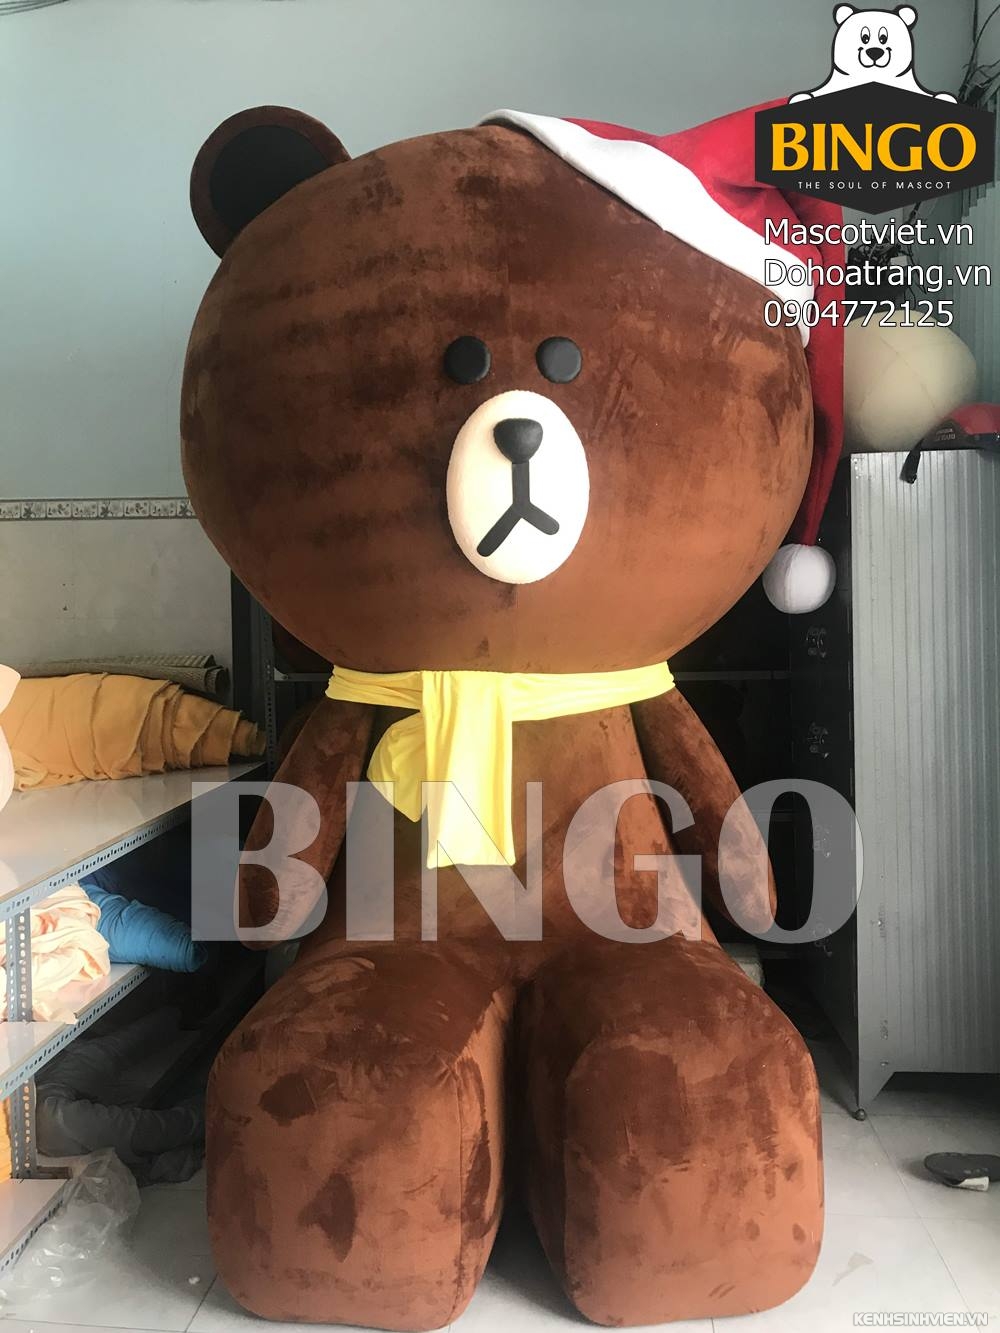 gau-brown-trung-bay-khong-lo-bingo-costumes-0904772125.jpg